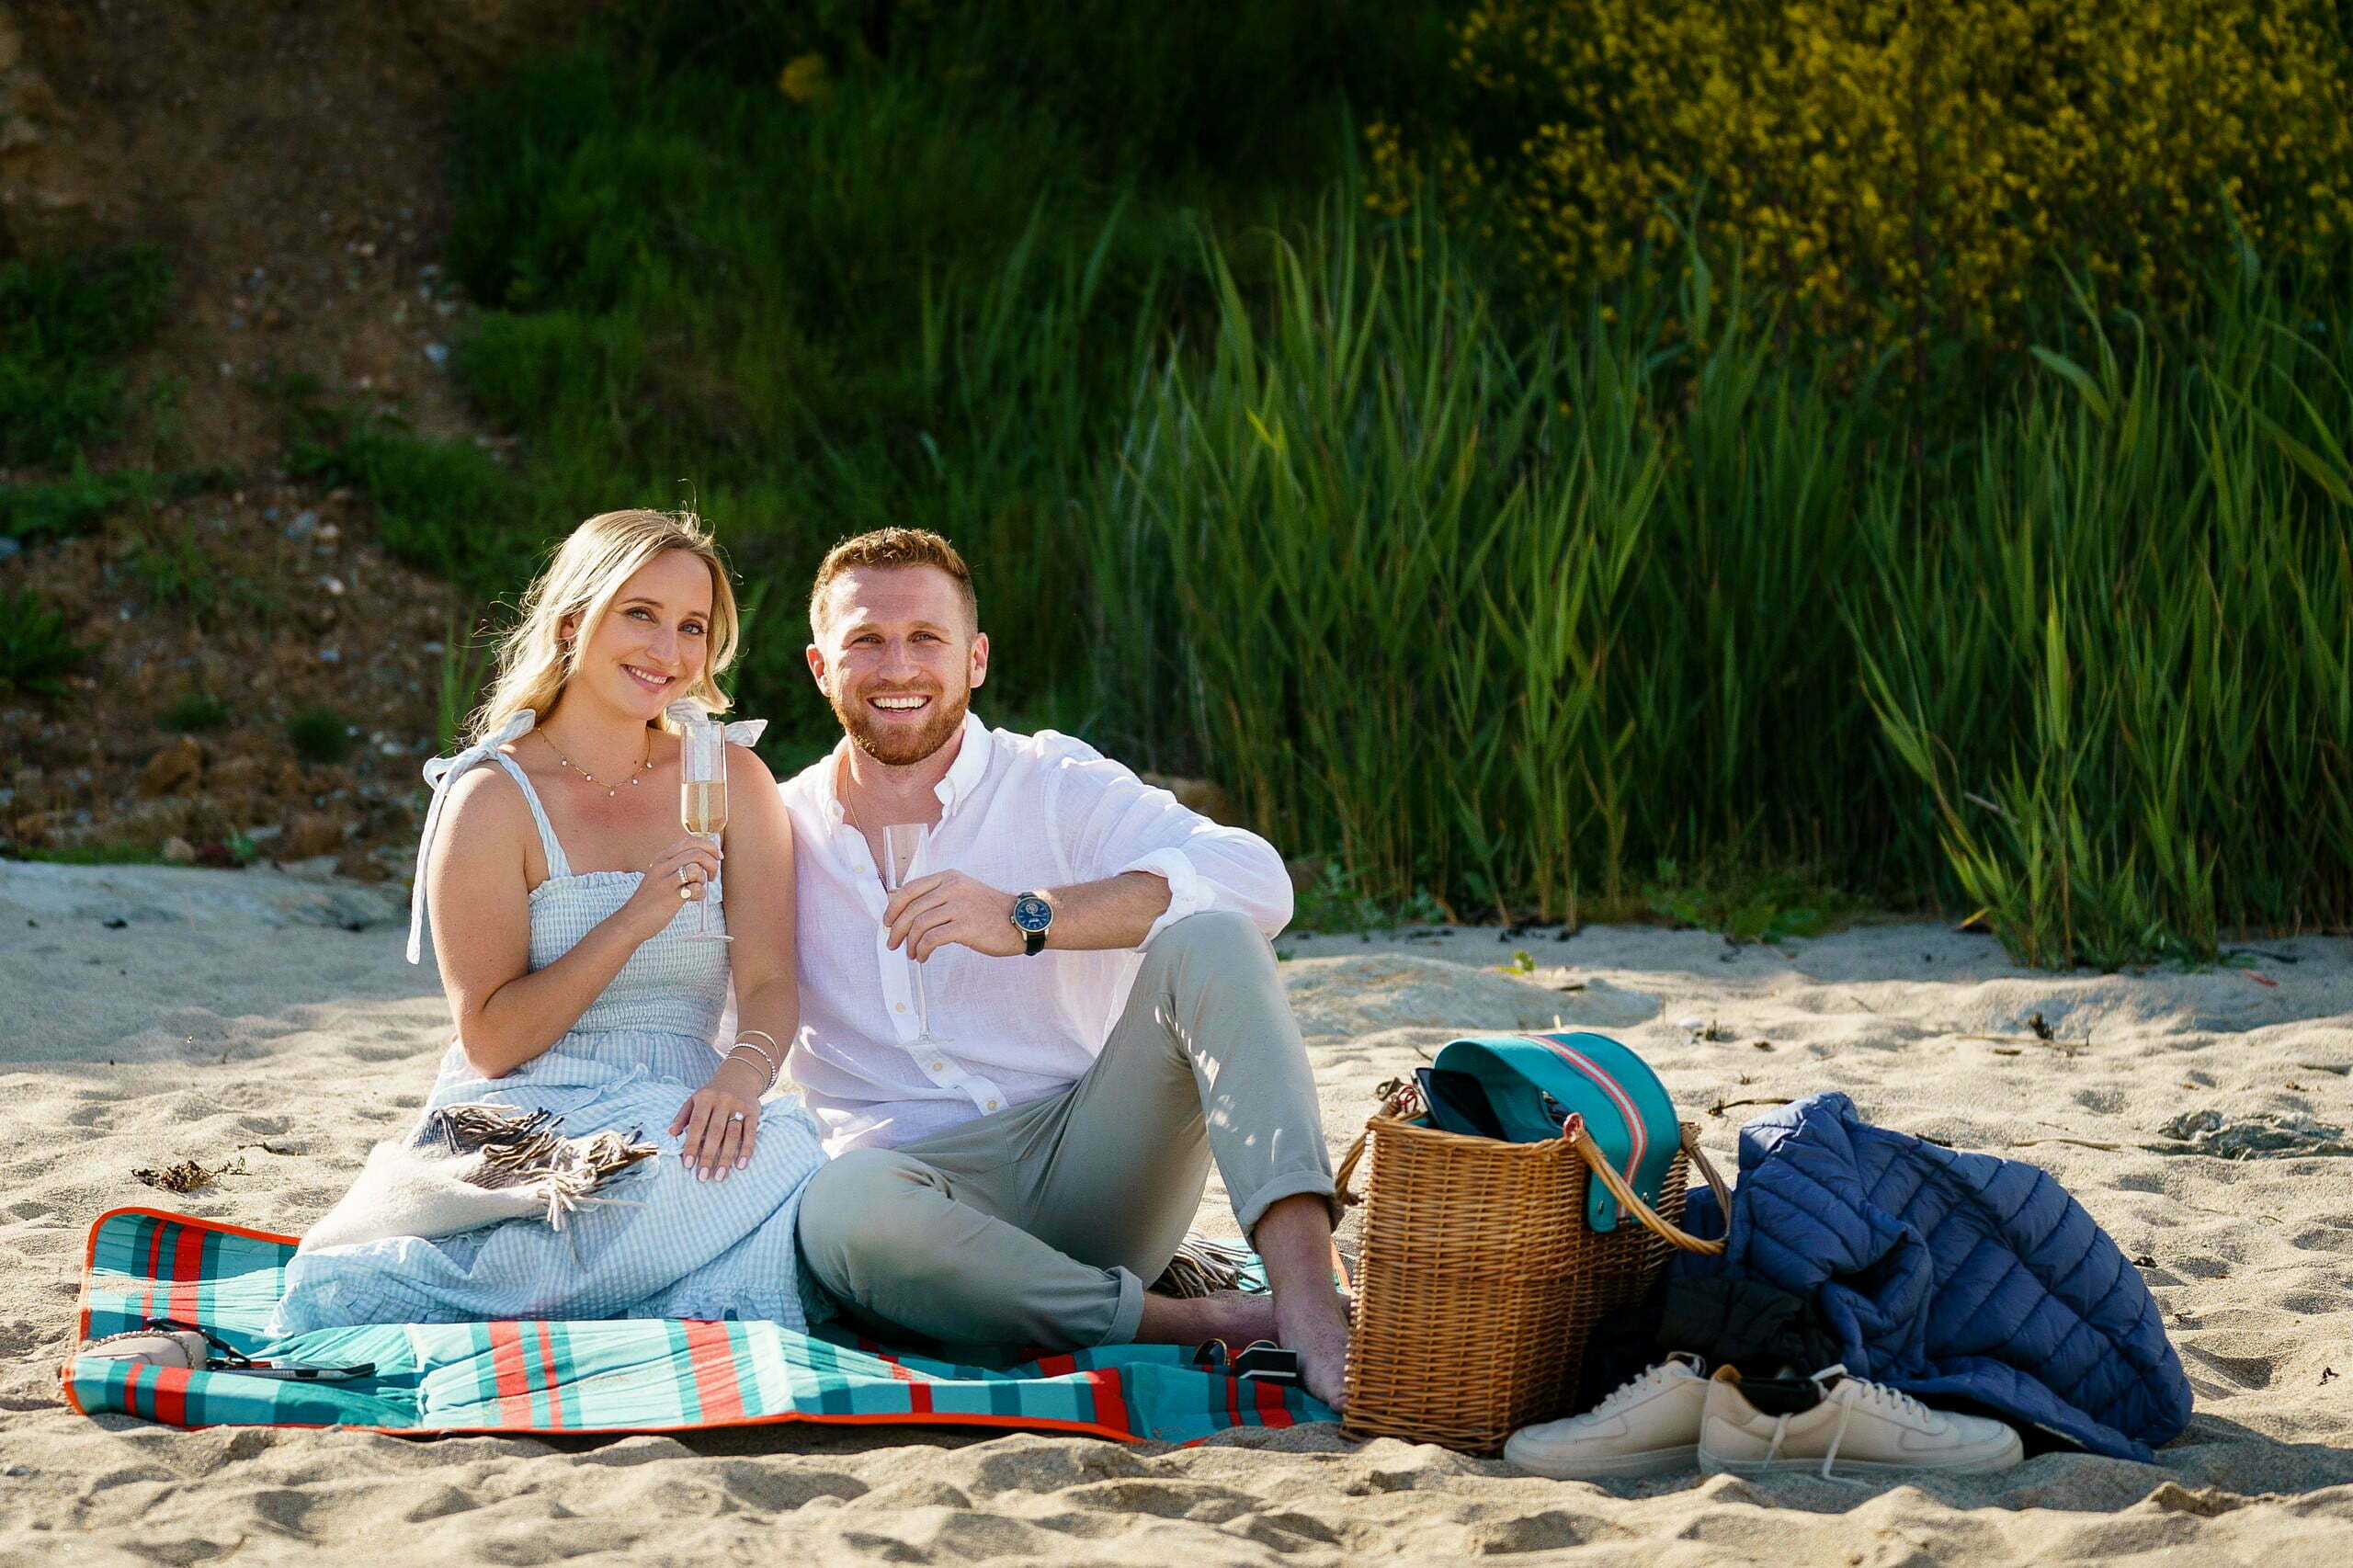 picnic wedding proposal on a beach in Cornwall